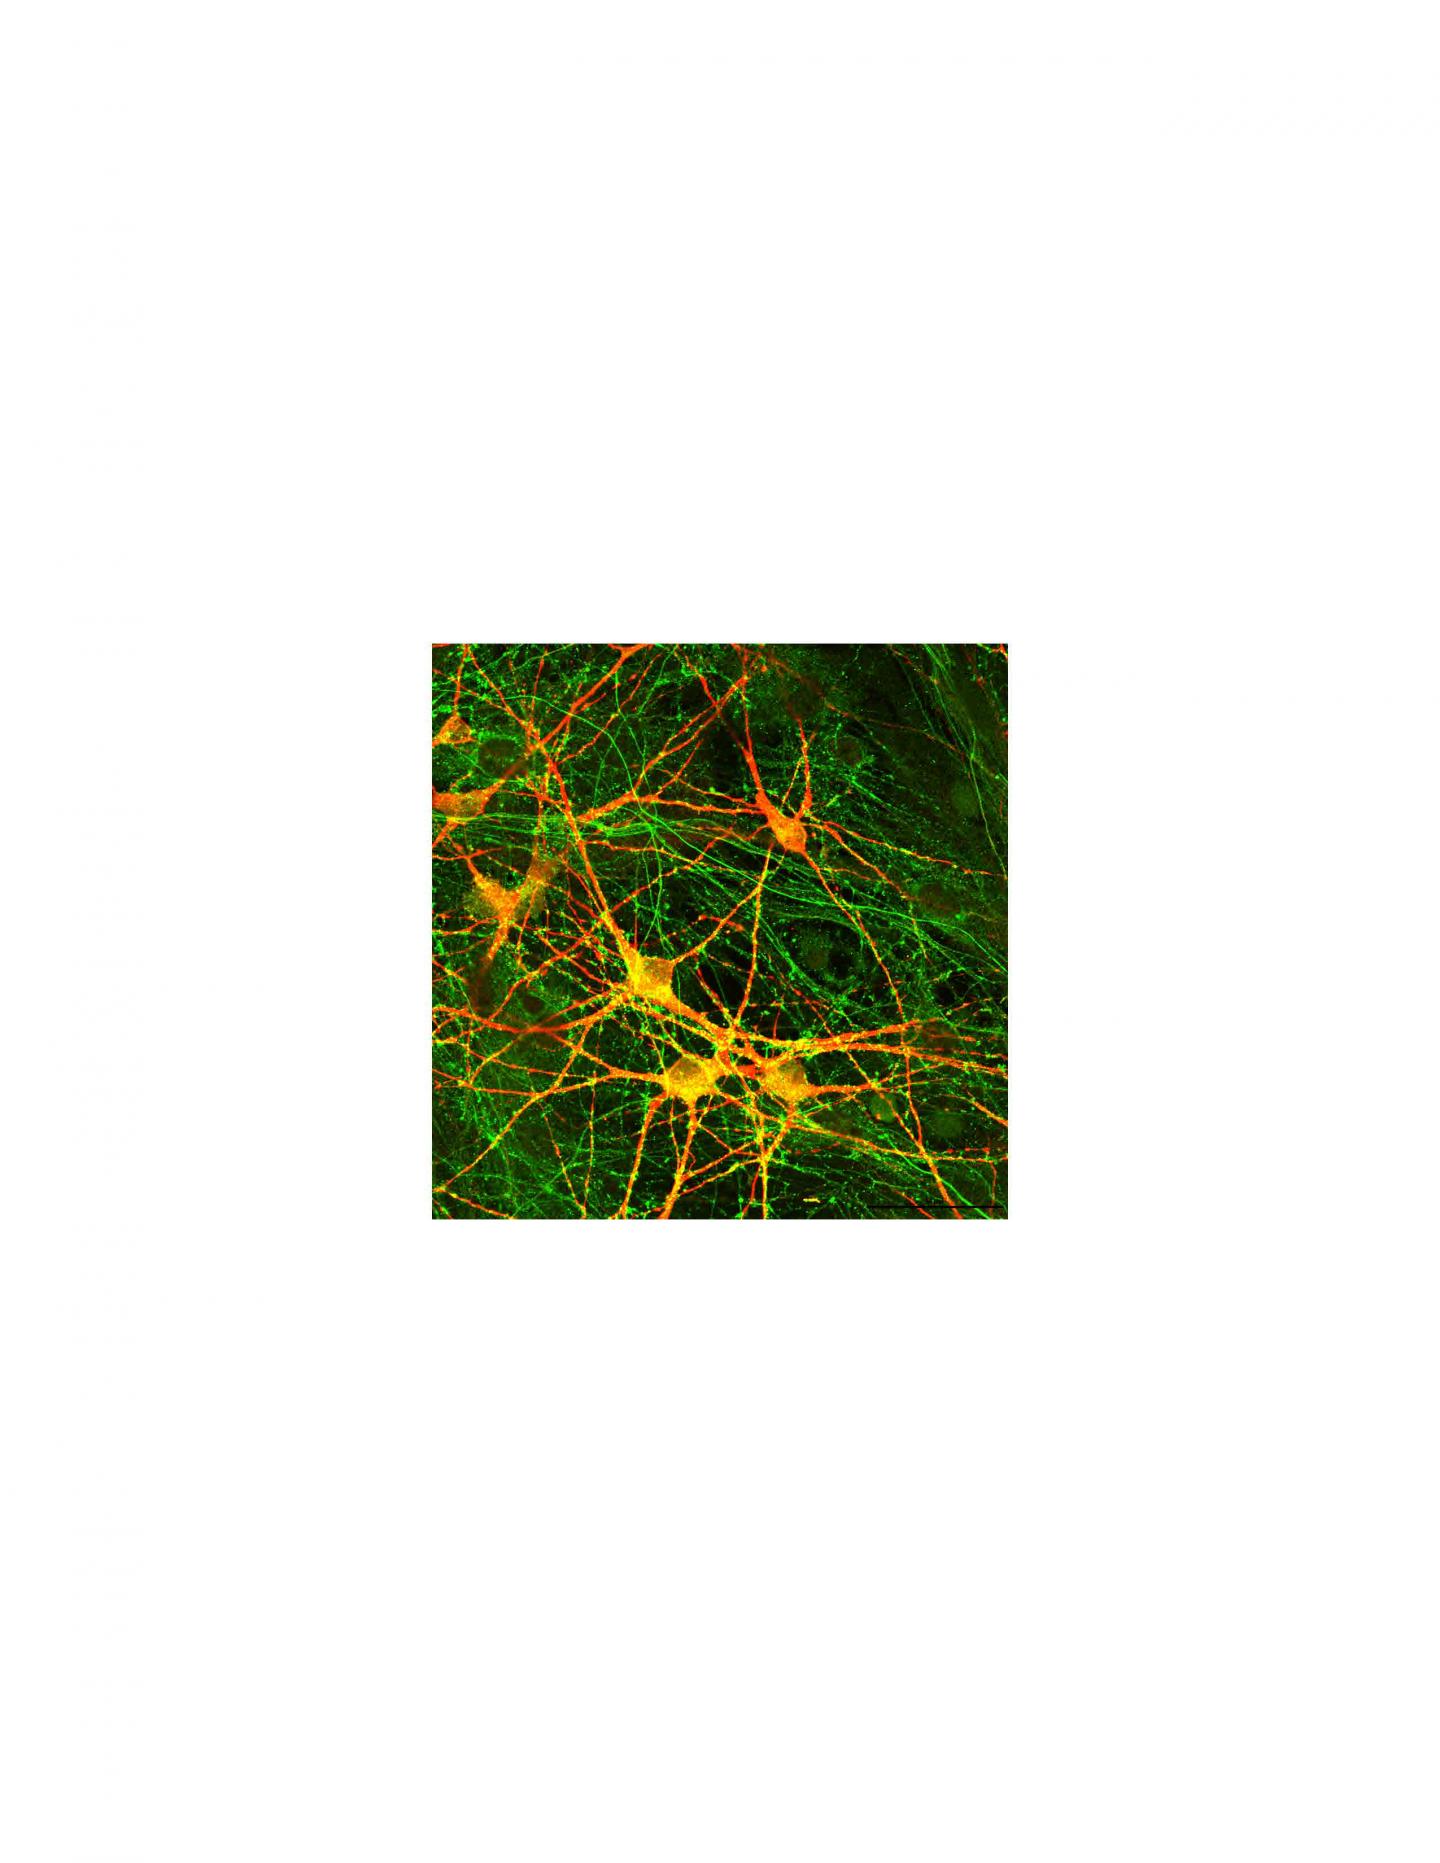 Human-derived neuron